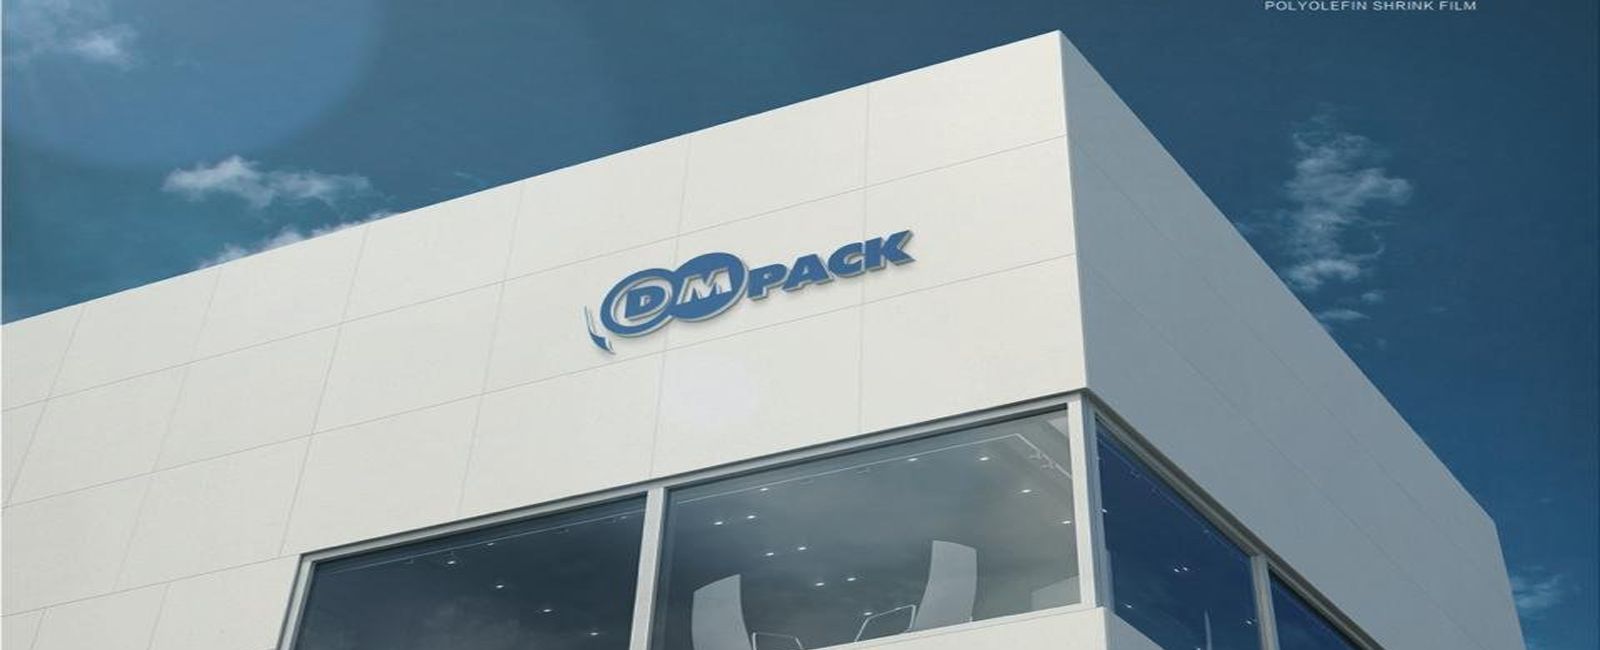 DMPACK Tech Co., Ltd. Main Image